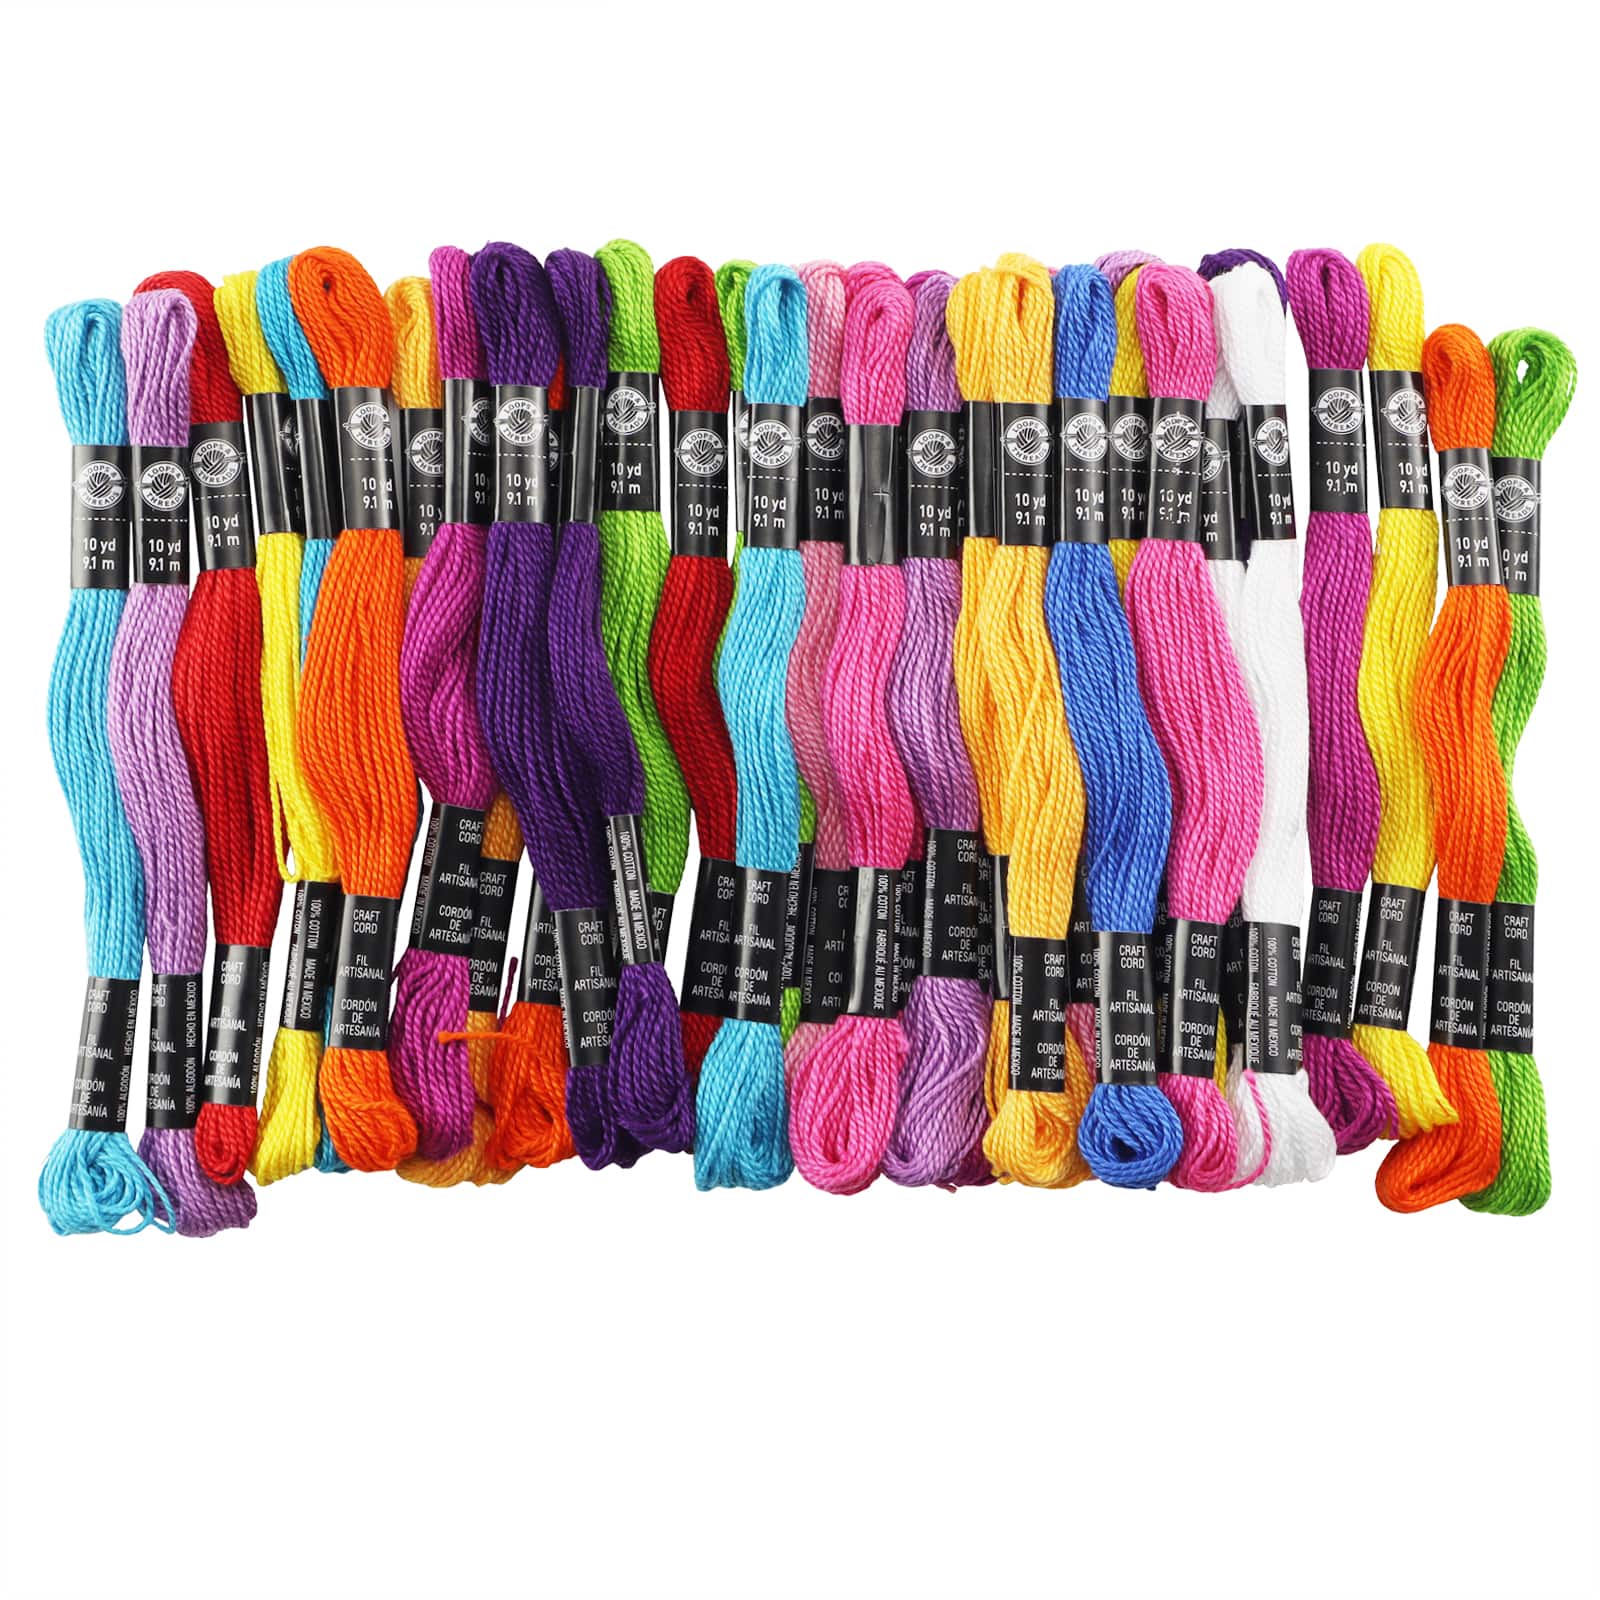 Loops & Threads Rainbow Craft Cord - 36 ct